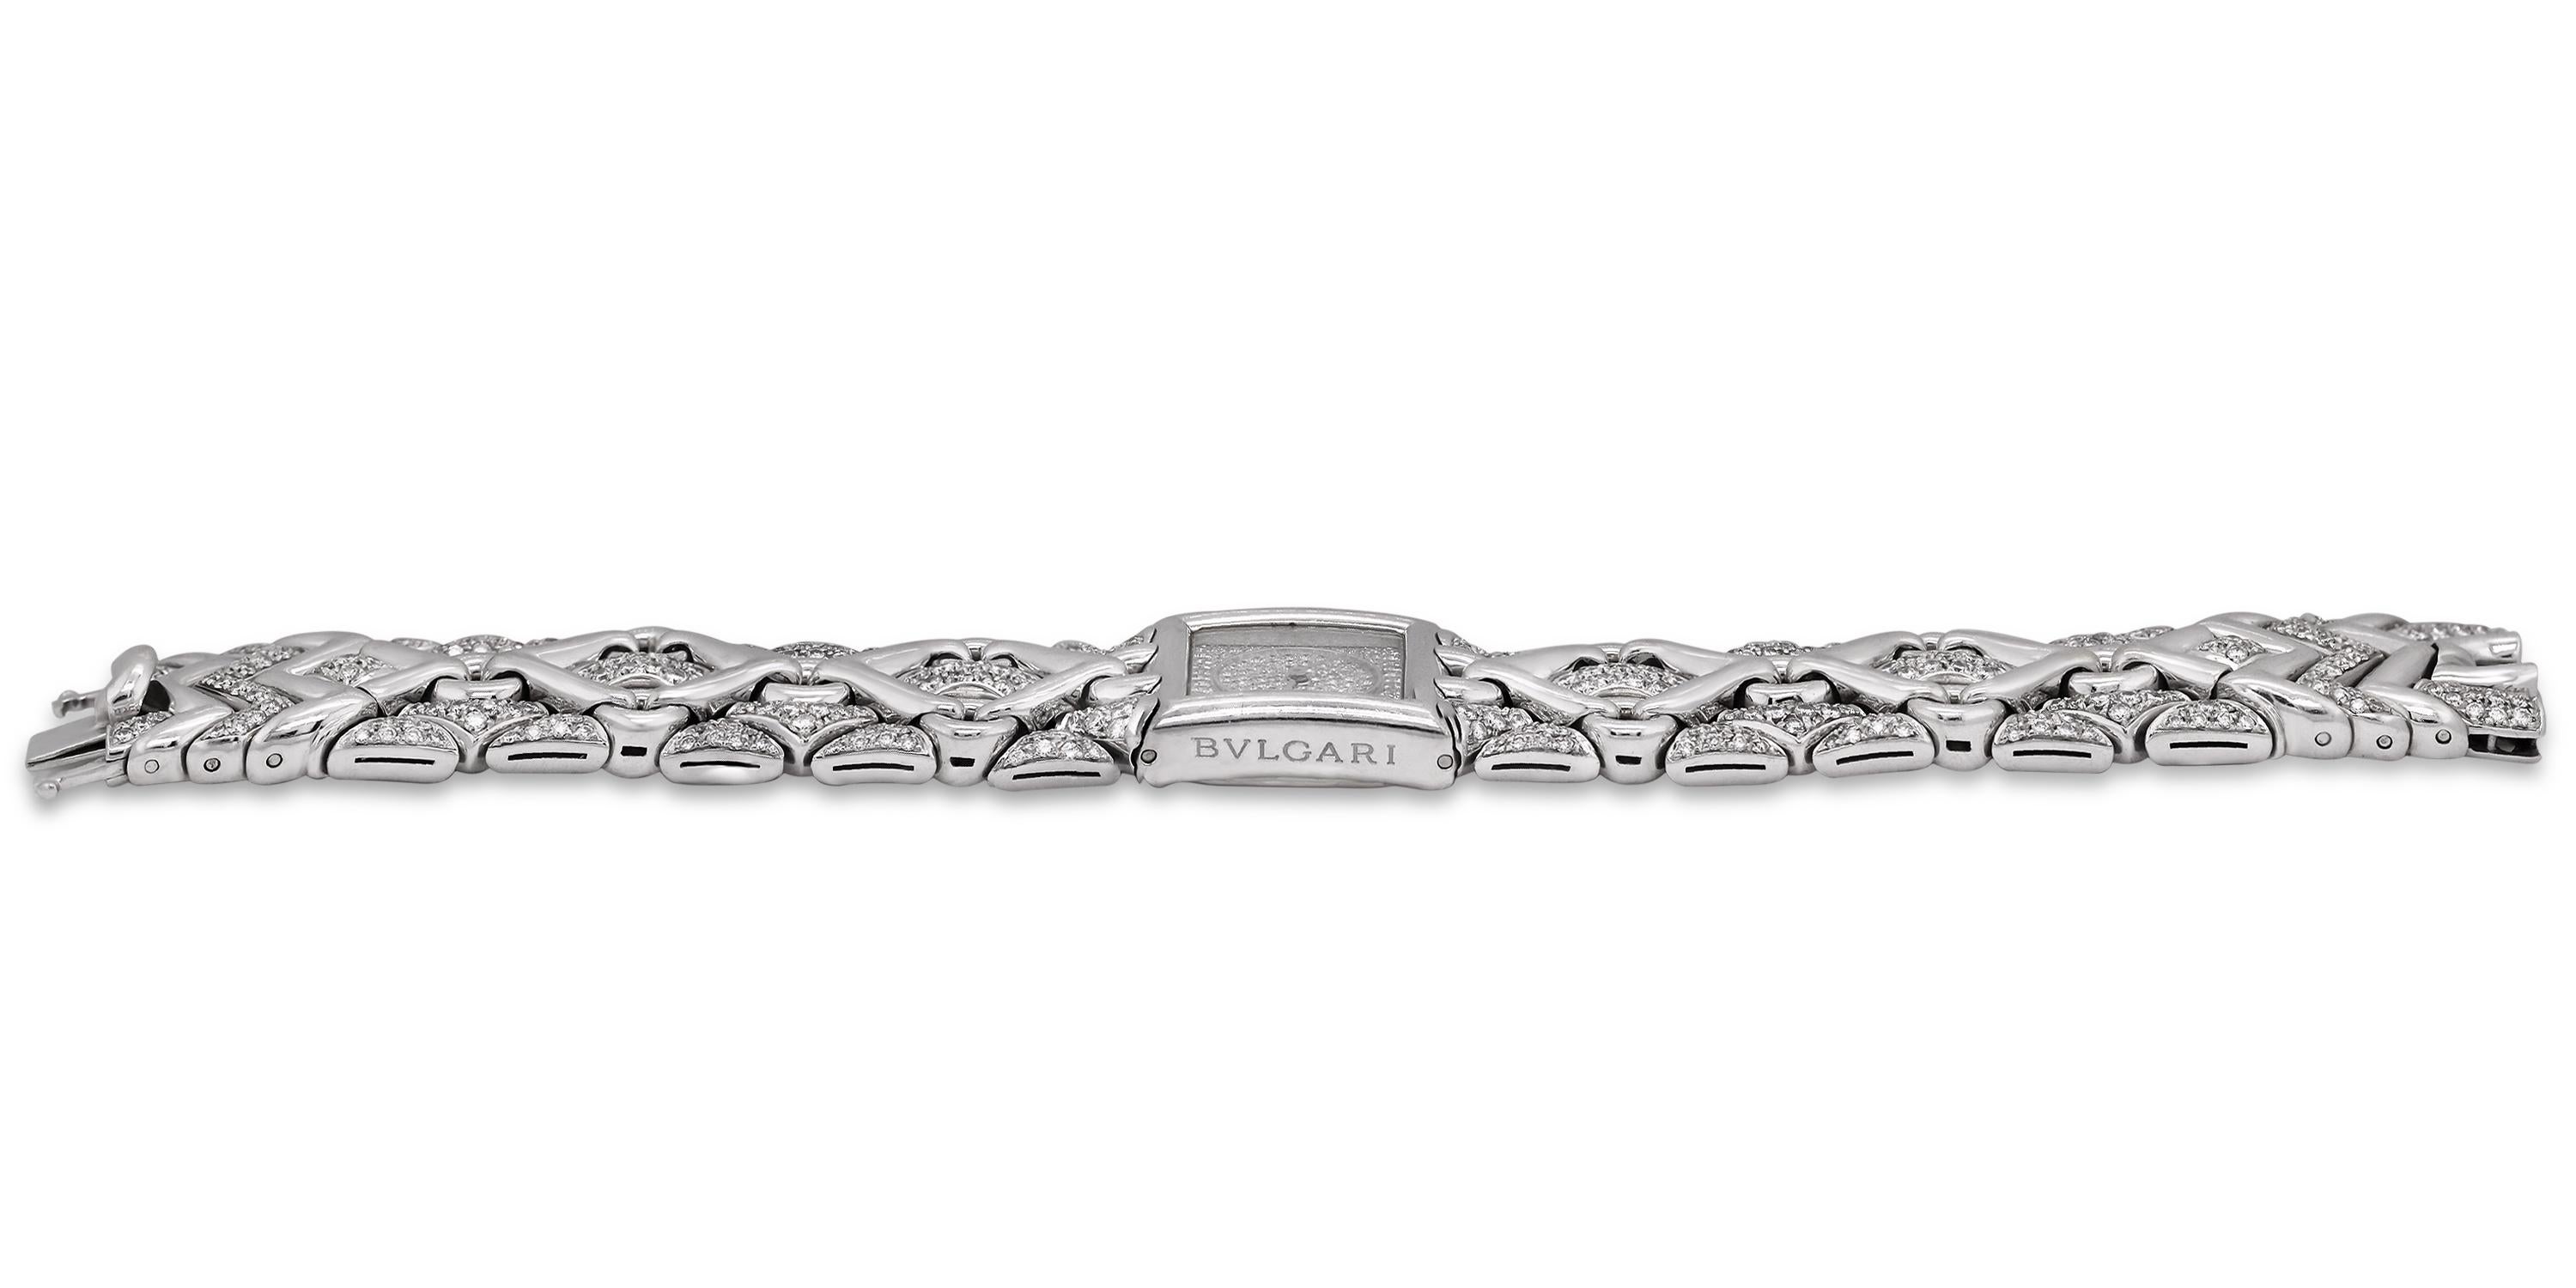 Bvlgari Trika 18K White Gold All Diamond Watch In Excellent Condition For Sale In Boca Raton, FL